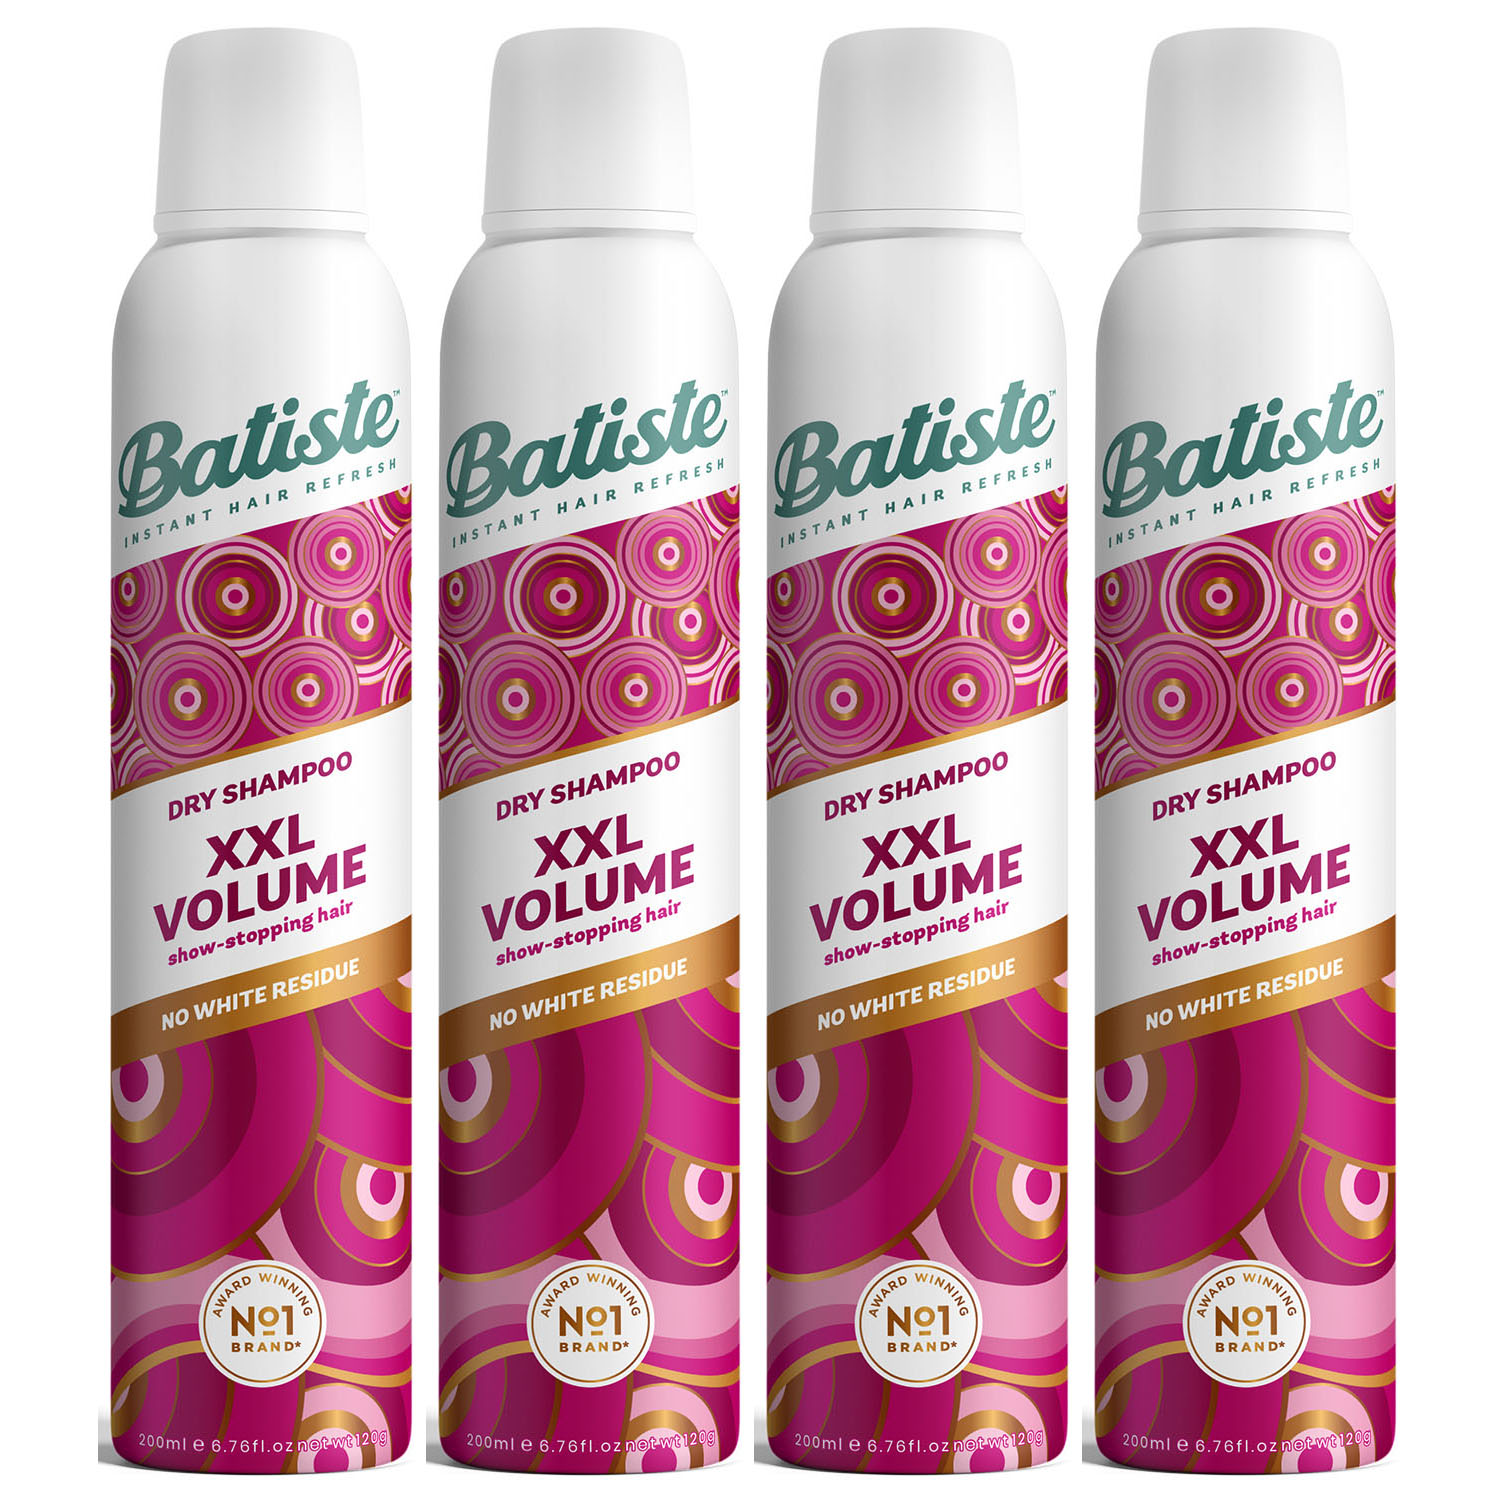 Batiste Комплект XXL Volume Spray Спрей для экстра объема волос 4 шт х 200 мл (Batiste, Stylist)